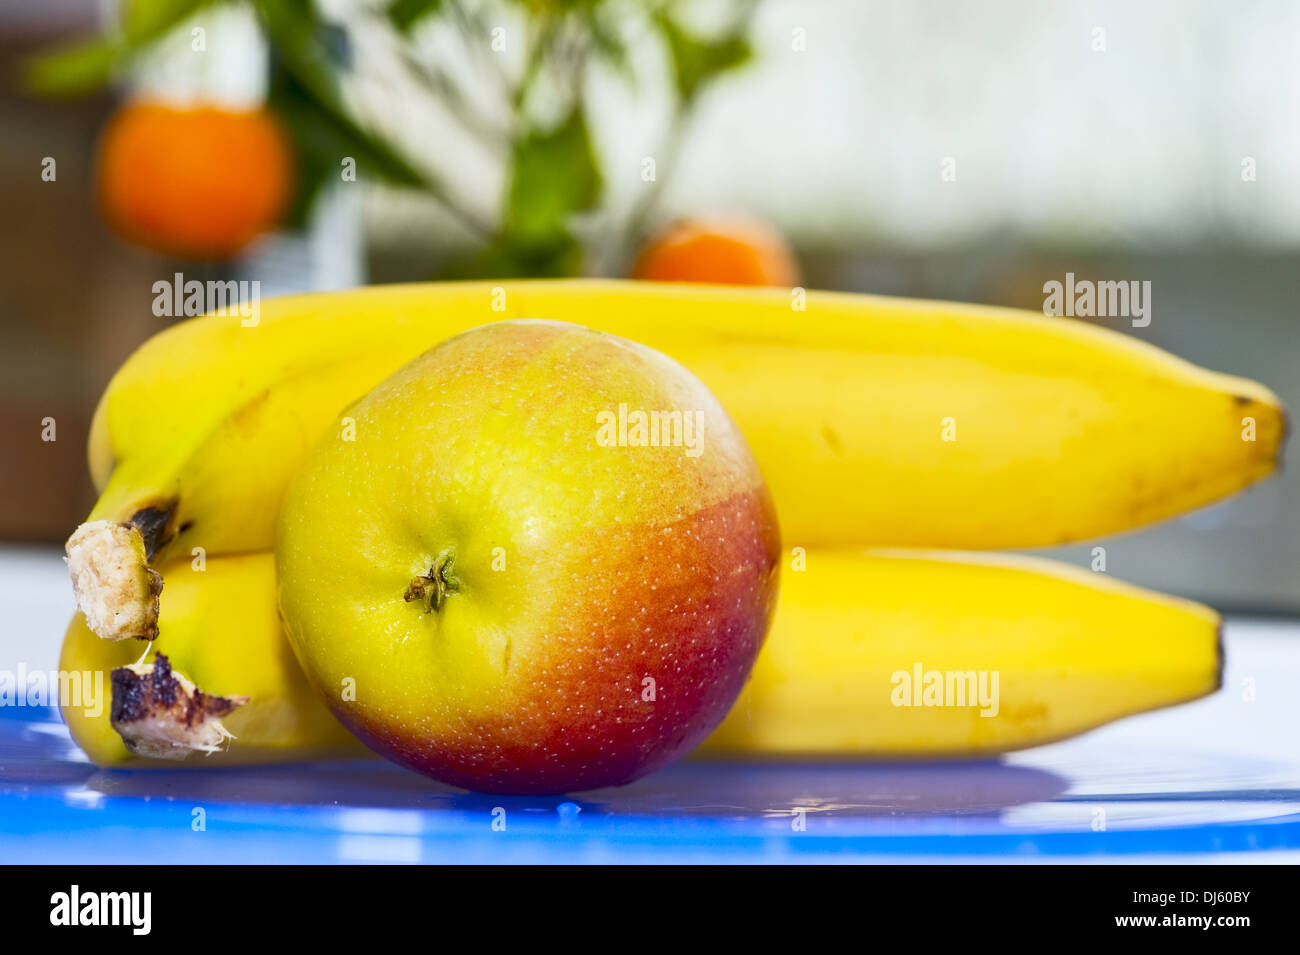 2 bananas and 1 apple Stock Photo